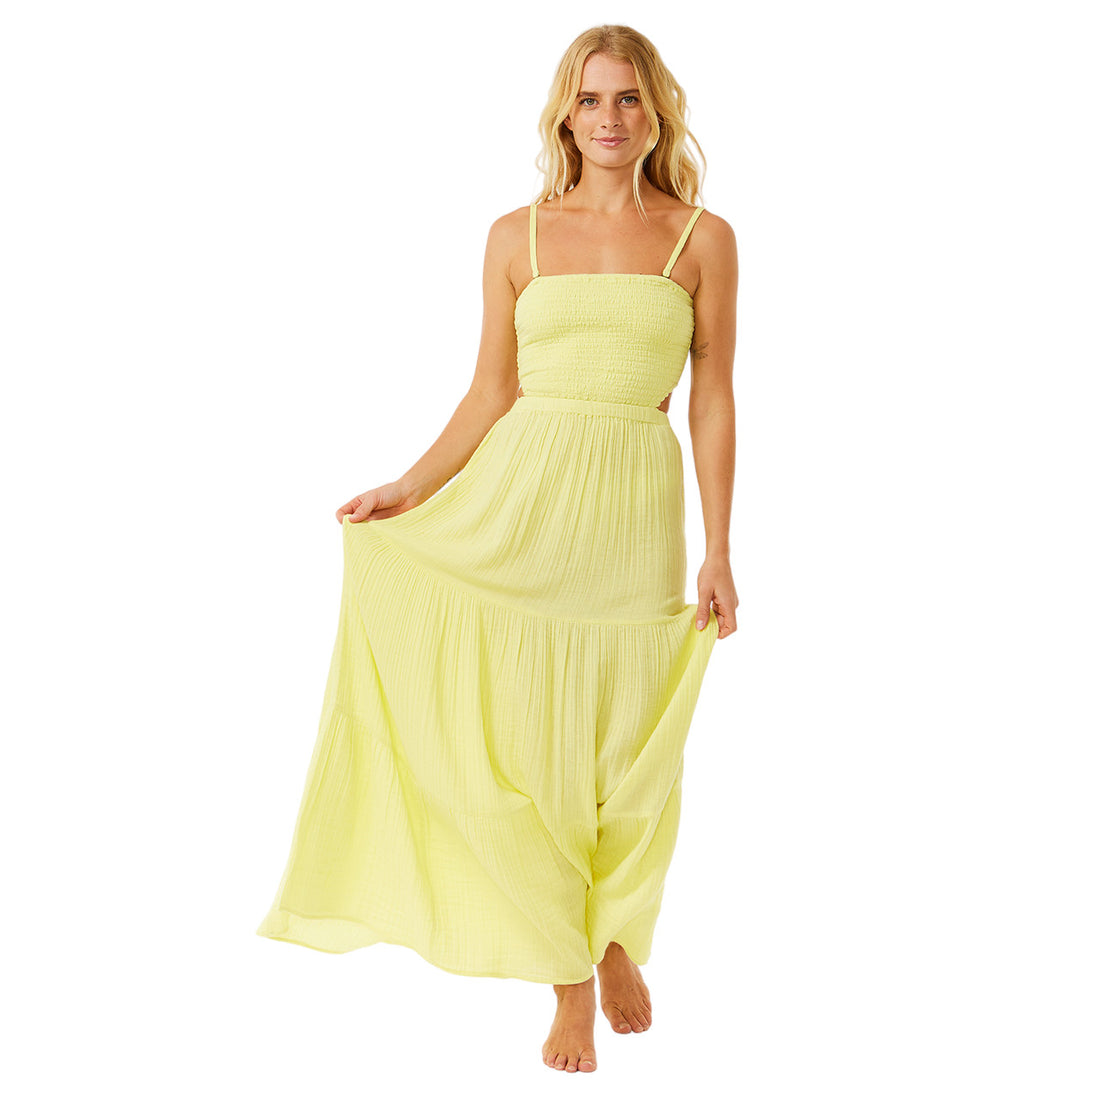 Rip Curl Premium Surf Maxi Dress Bright Yellow